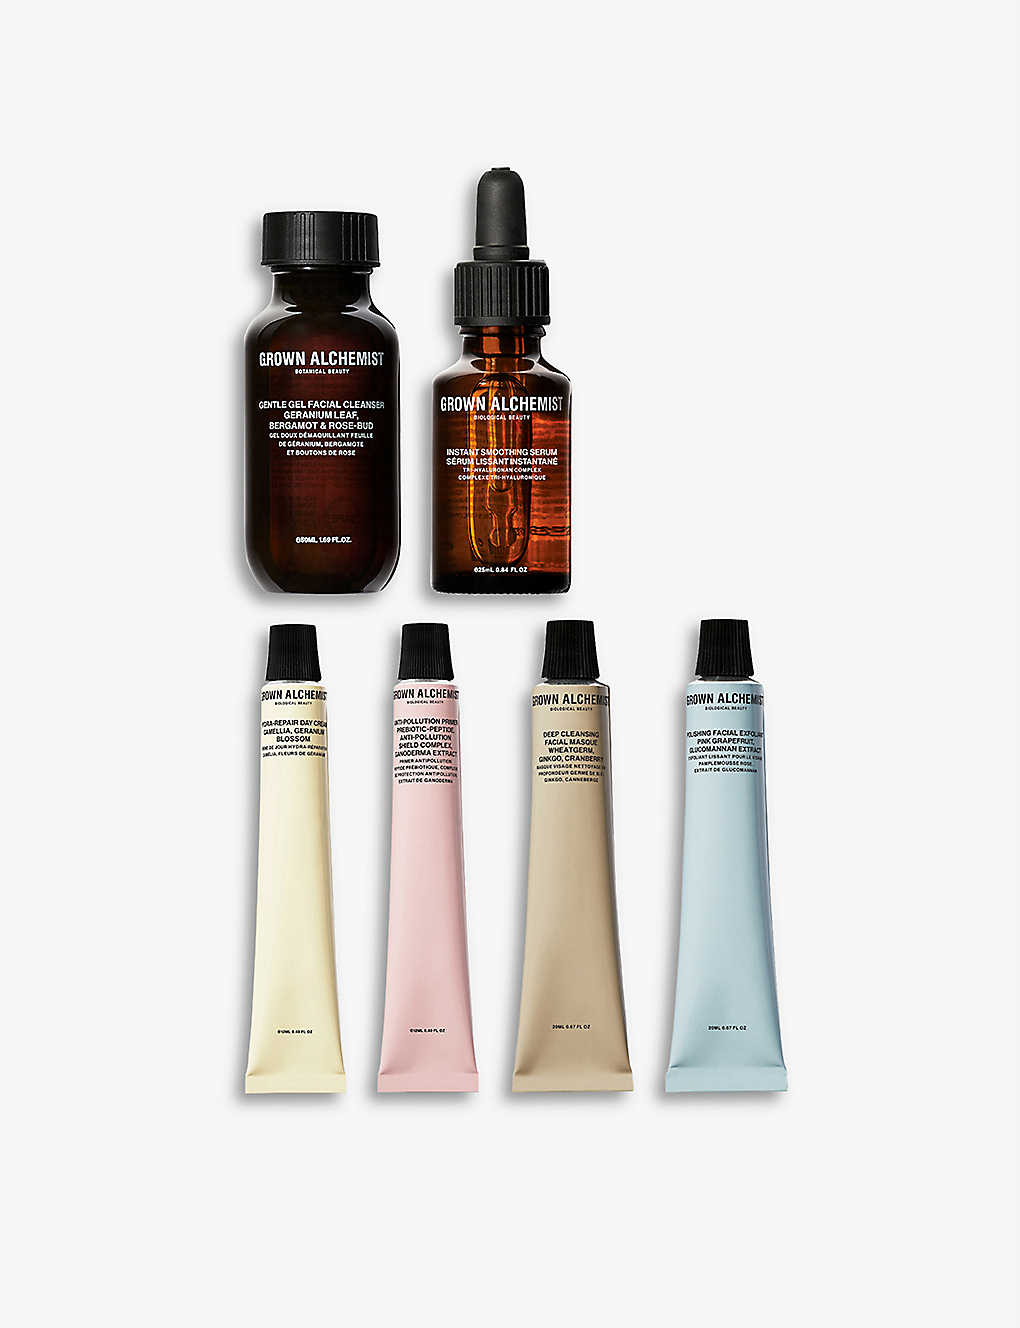 Grown Alchemist Skincare Essentials Prescription Kit